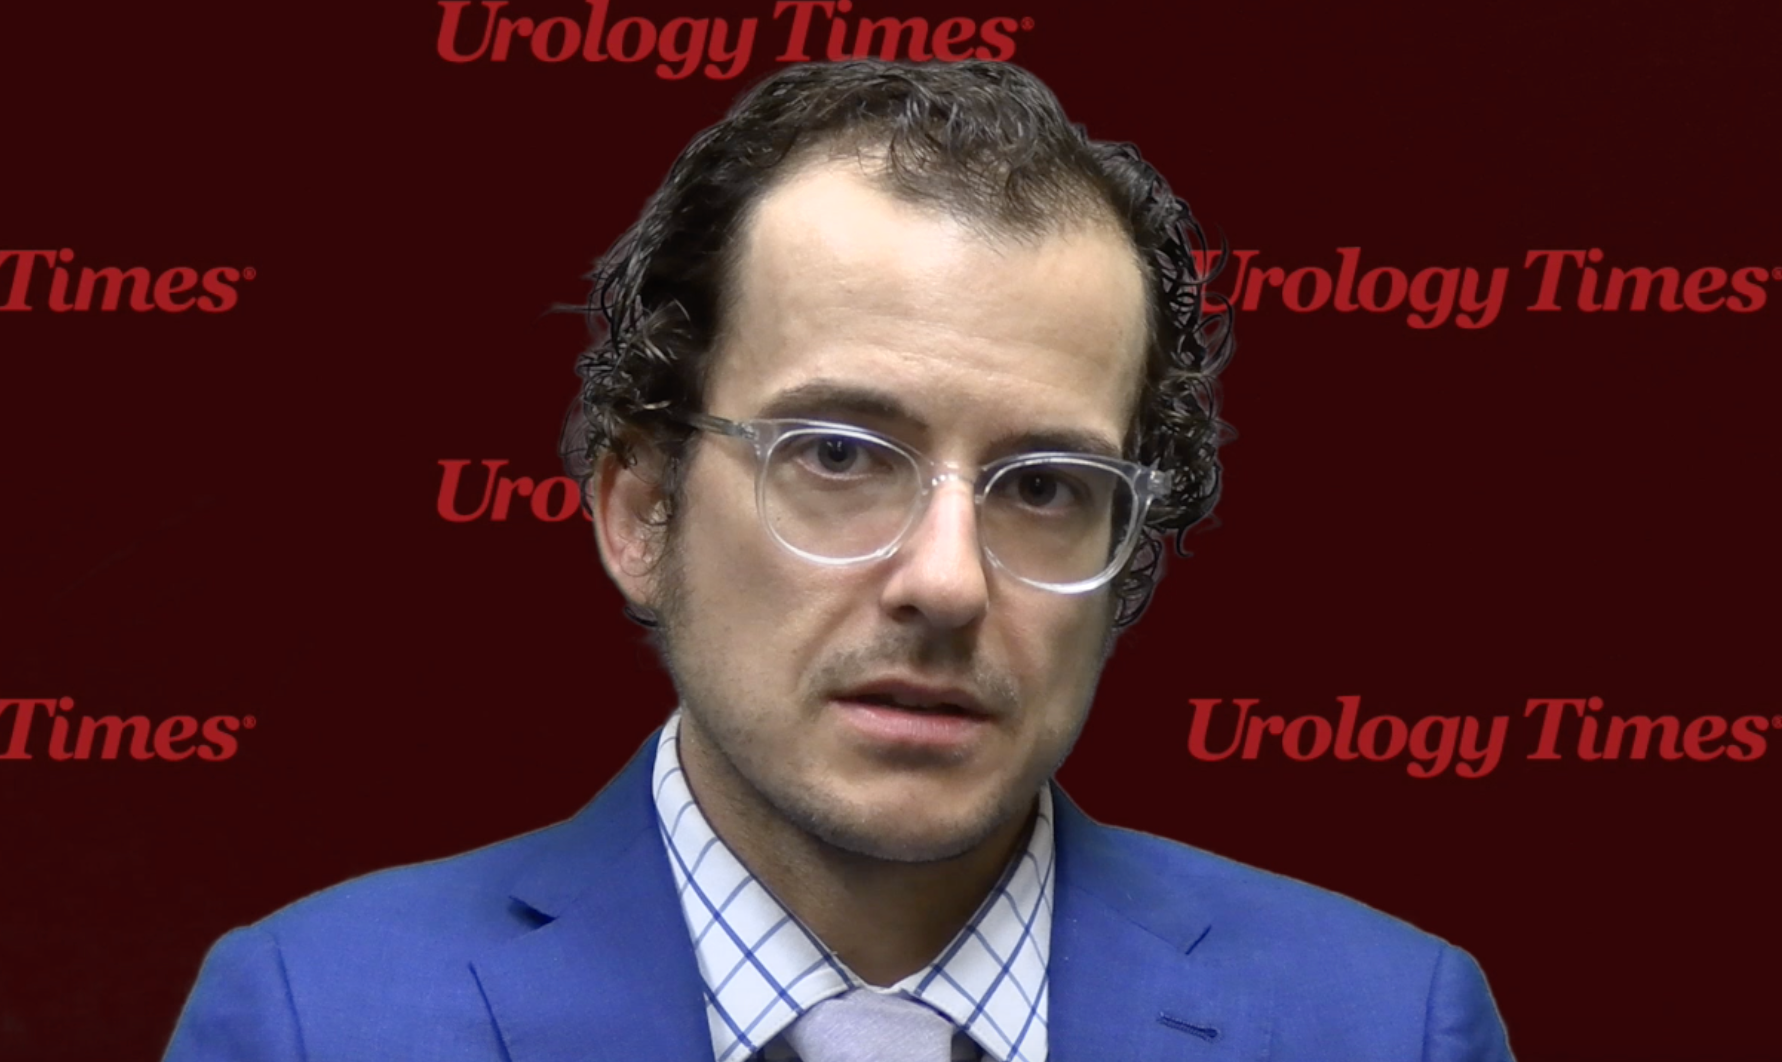 Dr. Laviana on novel opioid minimization protocol after urologic robotic surgery